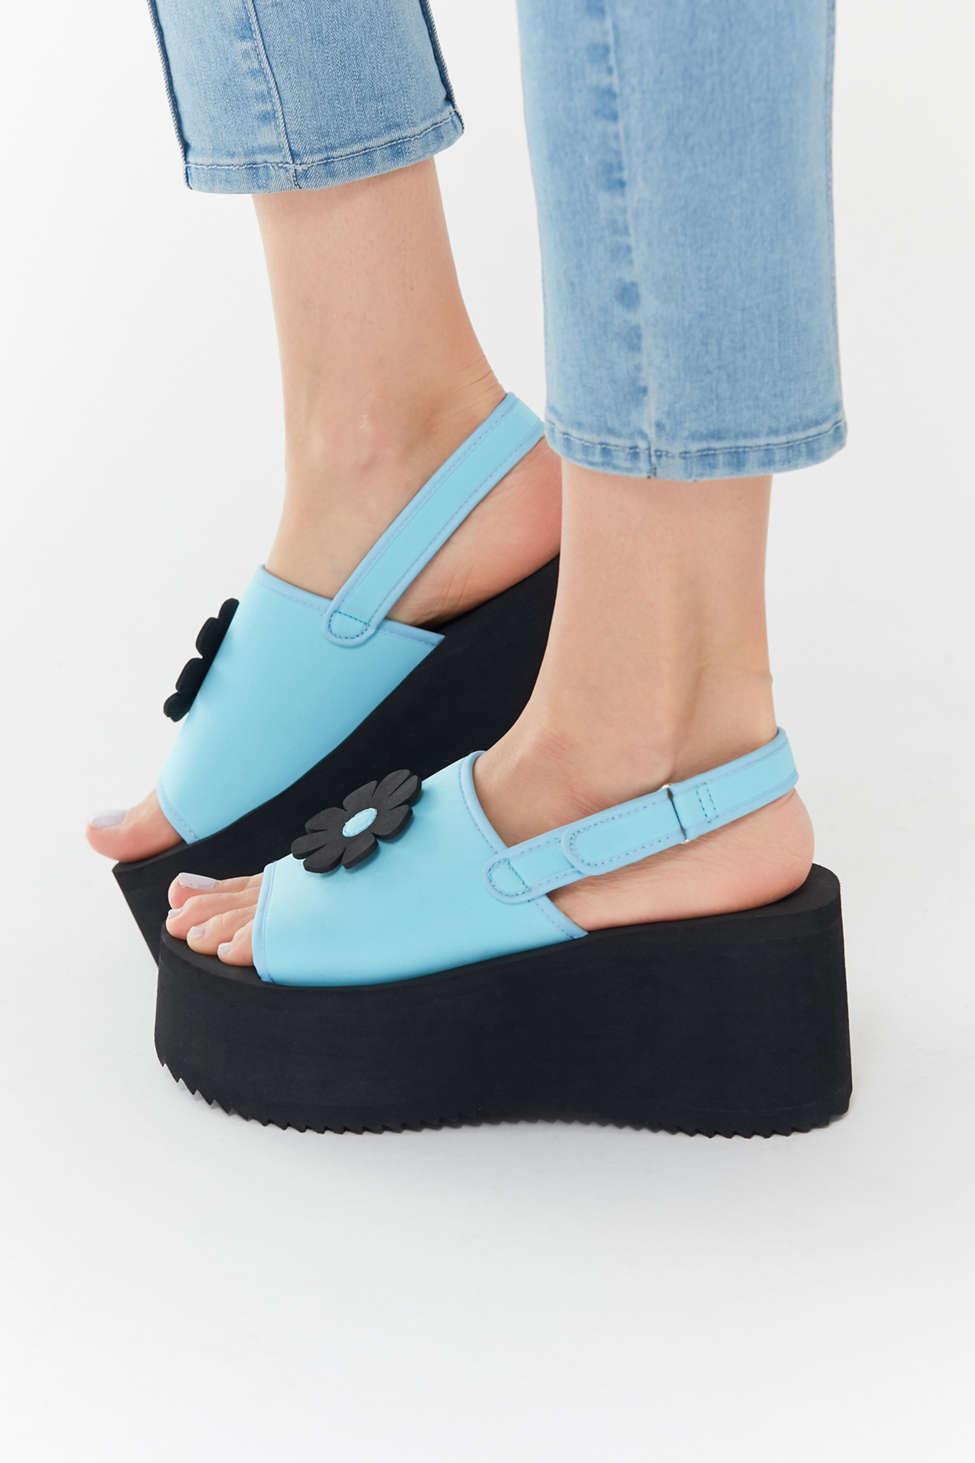 Urban Outfitters Uo Zoe Eva Platform Sandal in Blue | Lyst